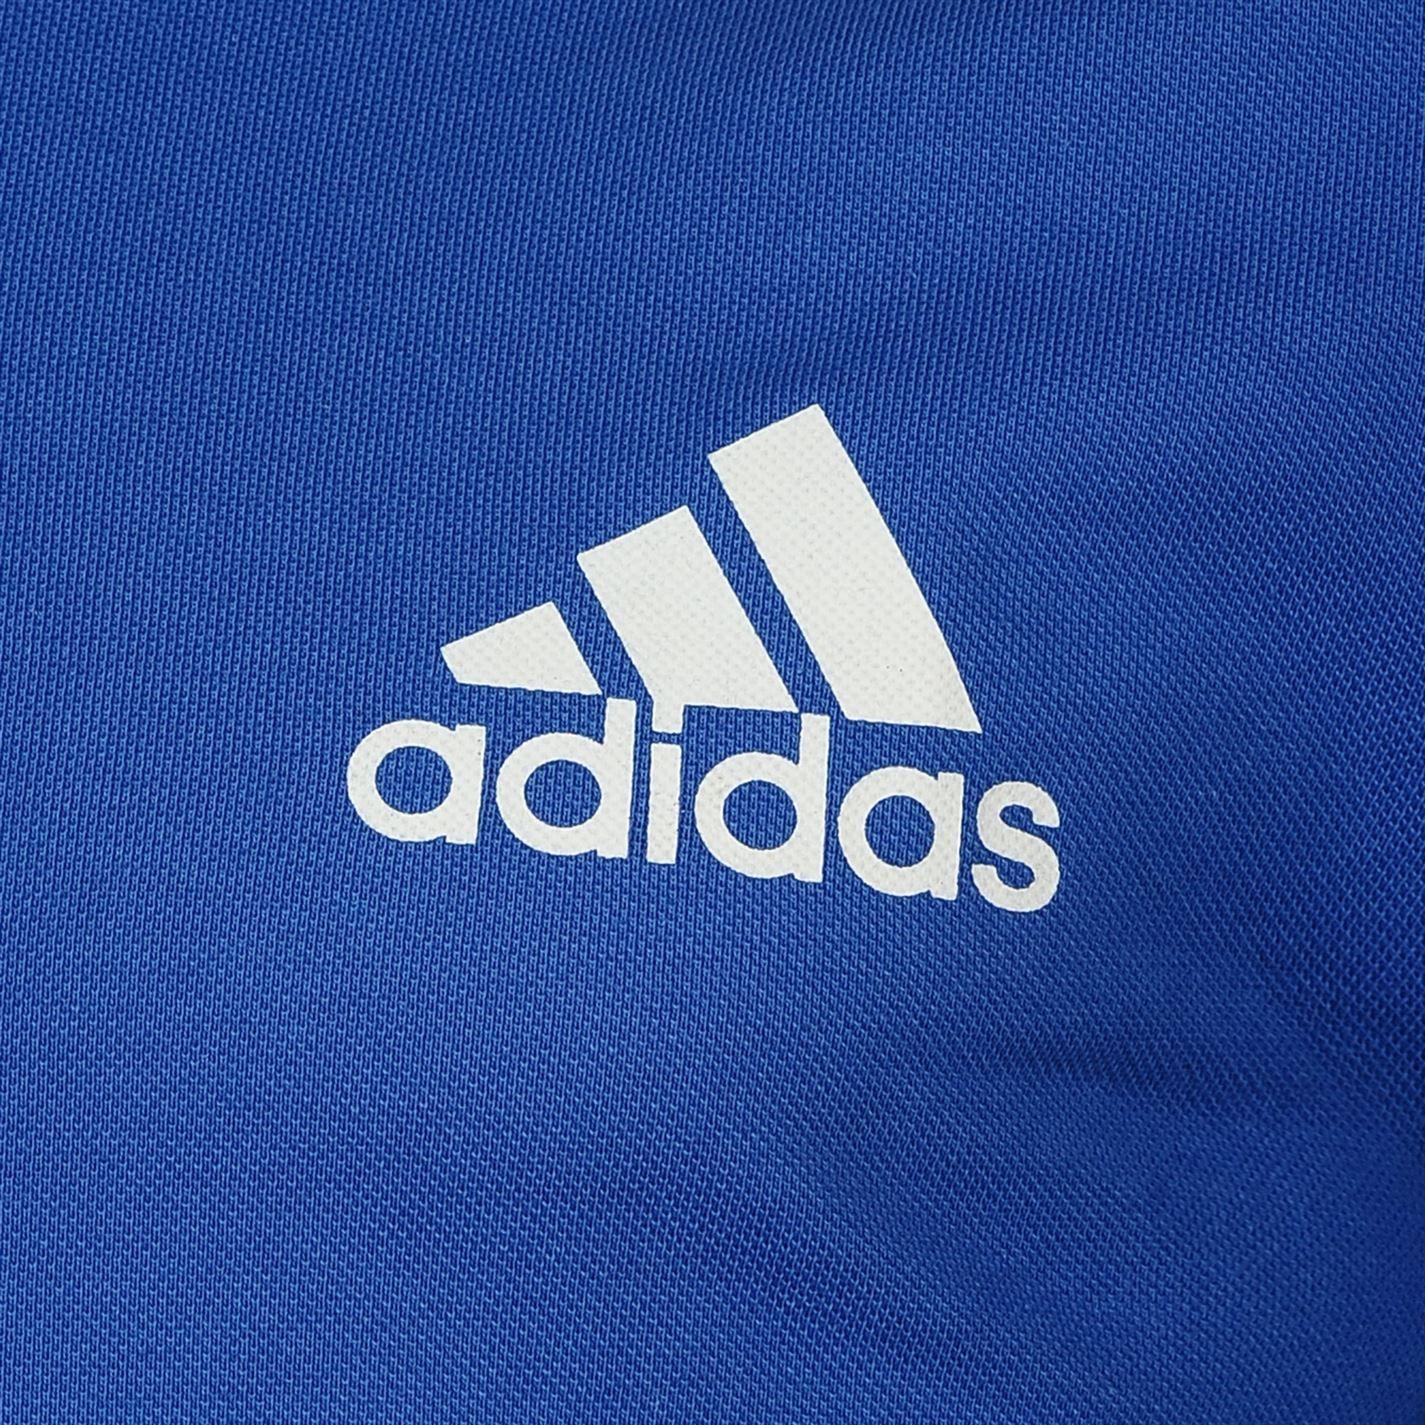 Blue and White Adidas Logo - adidas 3 Stripes Logo Polo Shirt Mens Blue/White Collared T-Shirt ...